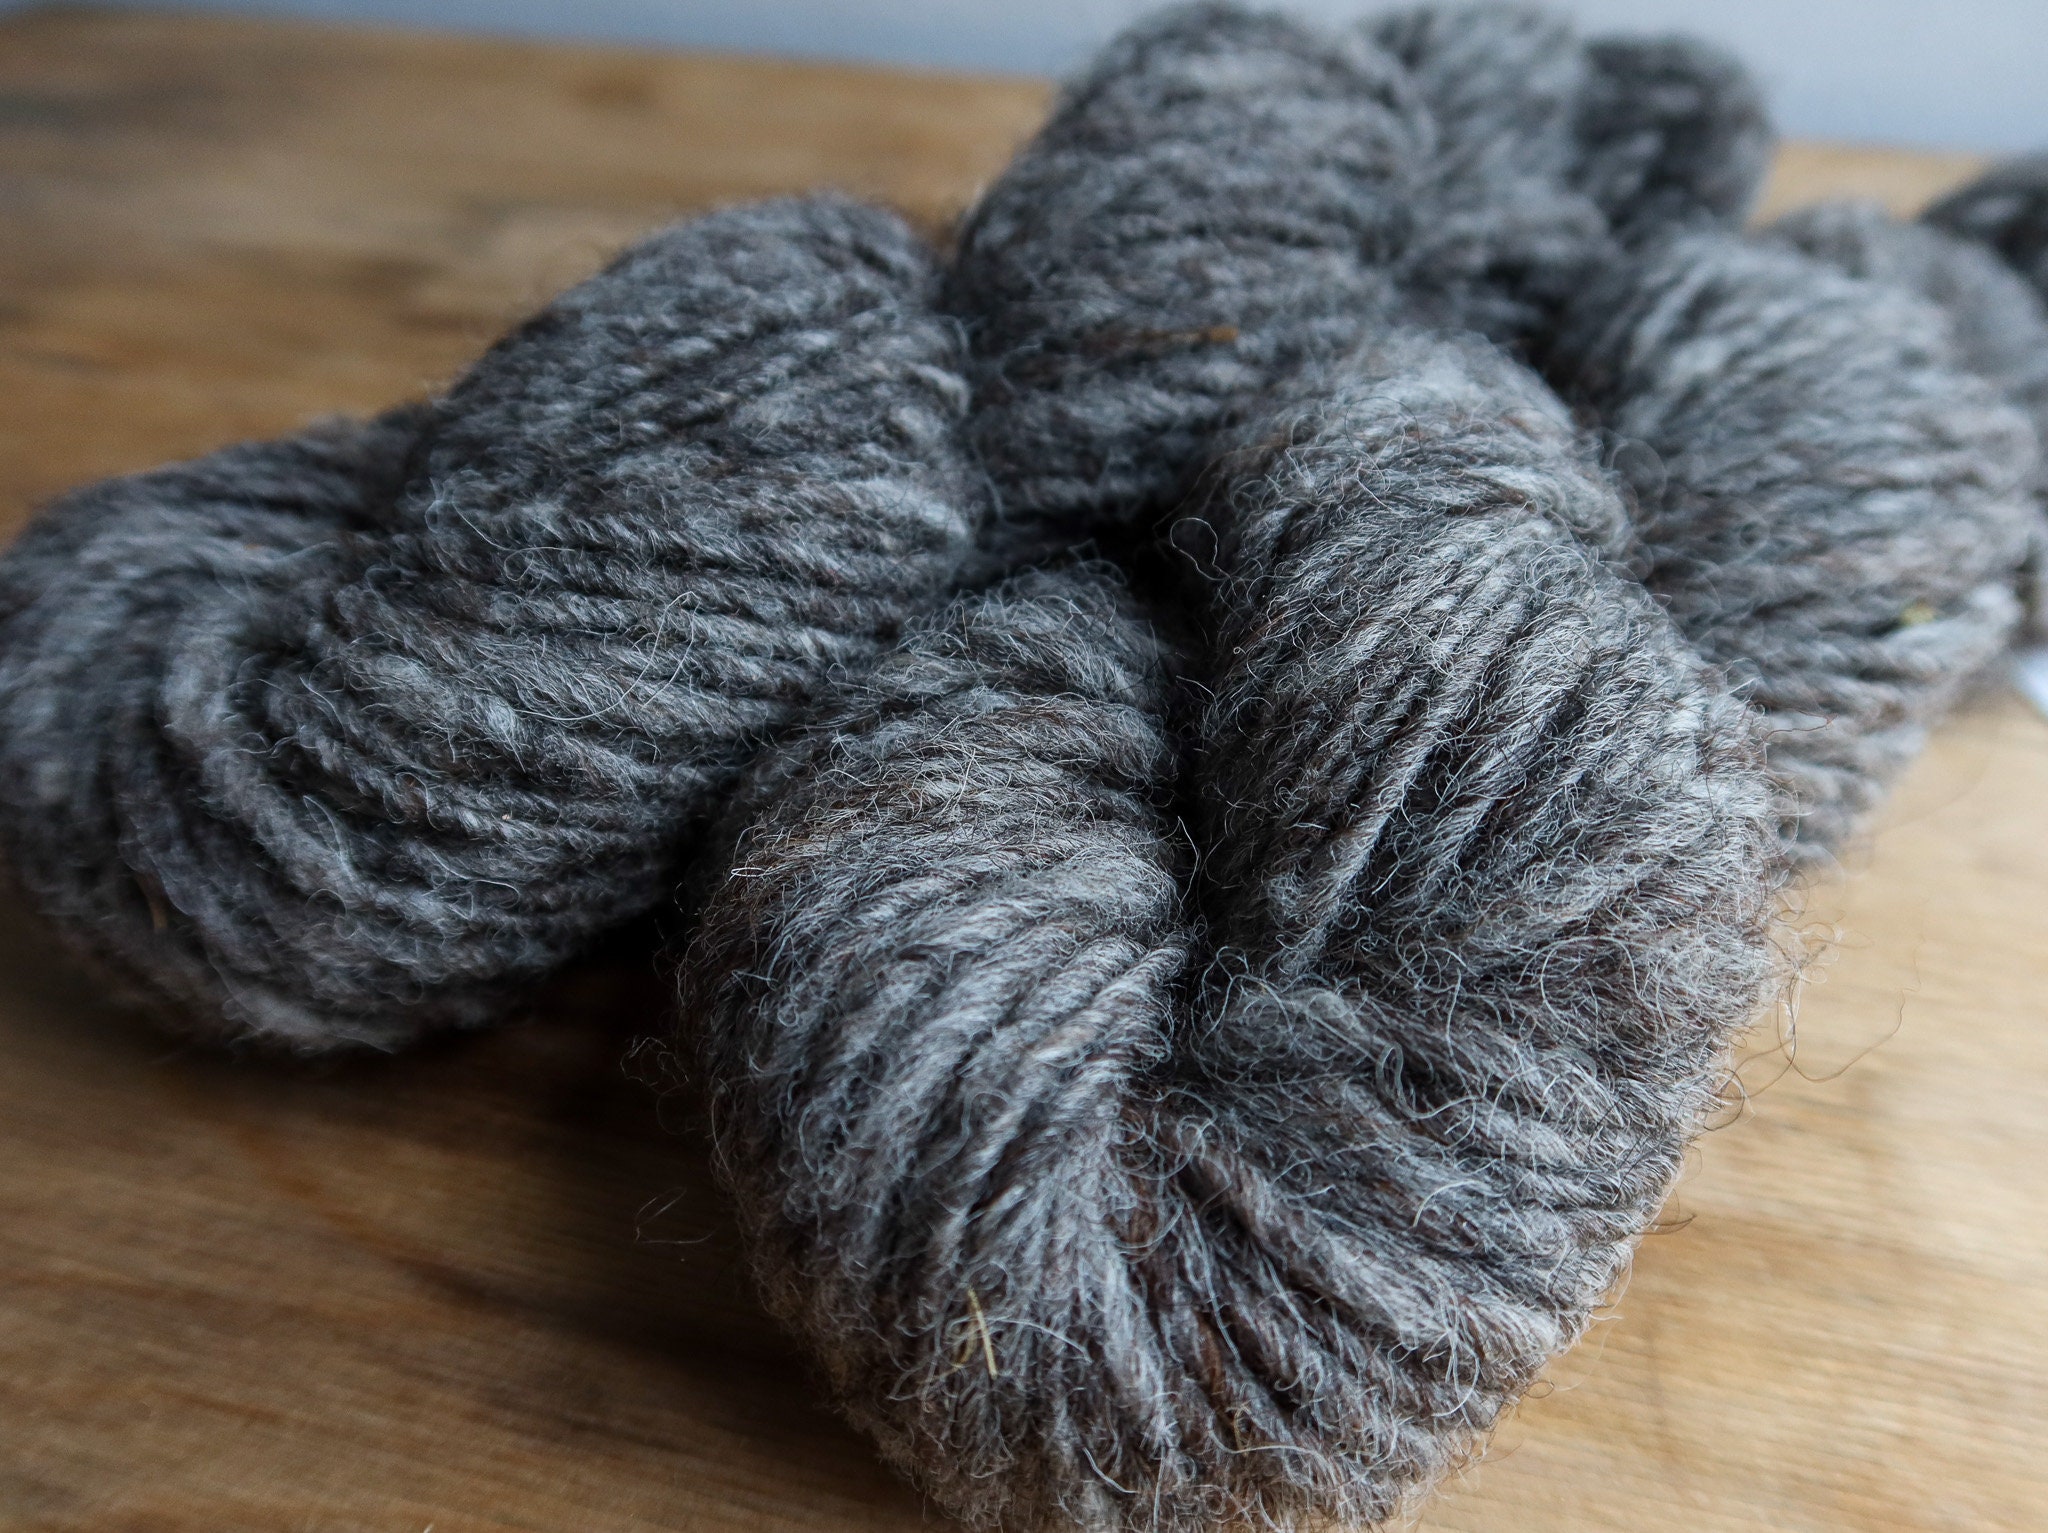 Suri Alpaca Yarn, Suri Singles, Salt River Mills Bulky Yarn, Premium Alpaca  Yarn for Knitting, Yarn for Chunky Hats, Crocheting, Weaving 